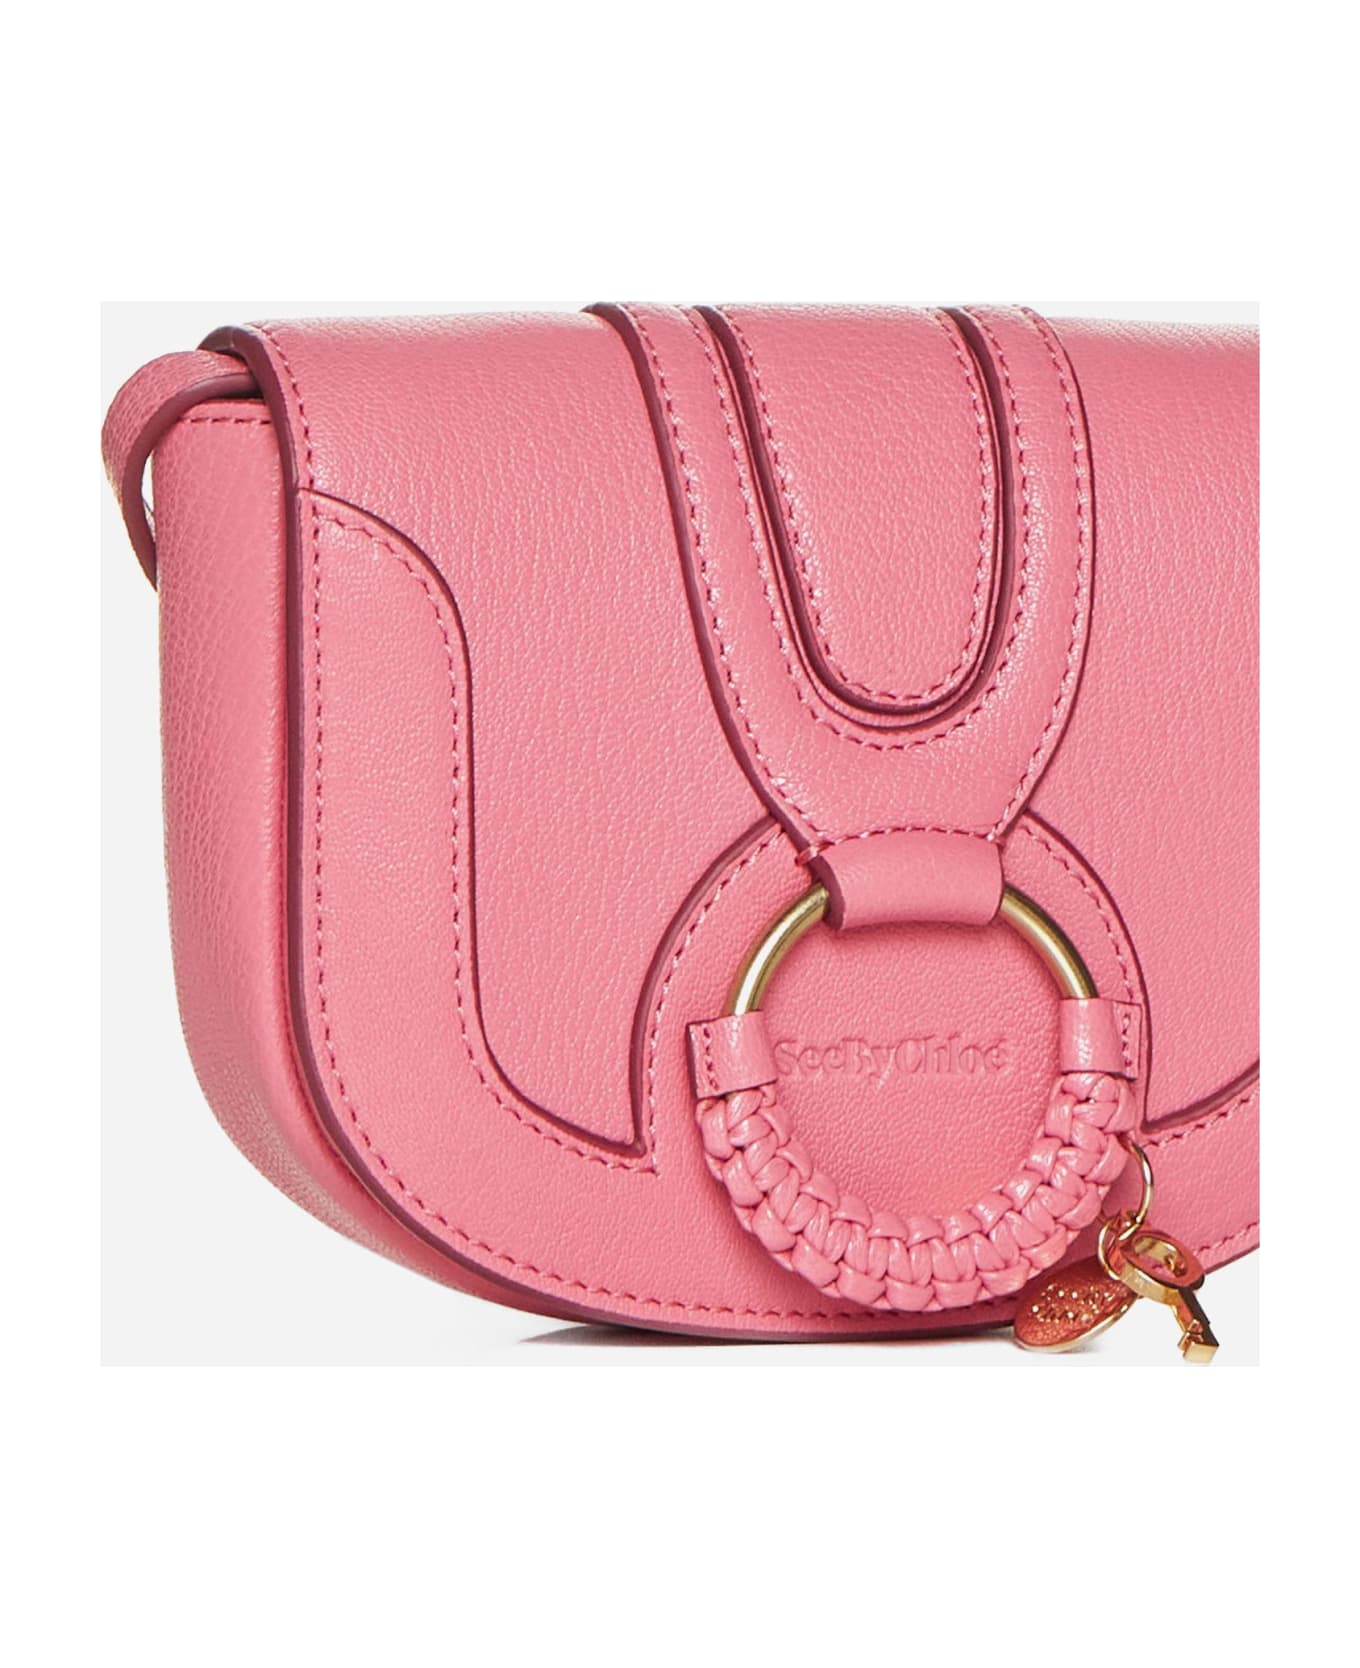 See by Chloé Hana Leather Bag - Pushy Pink